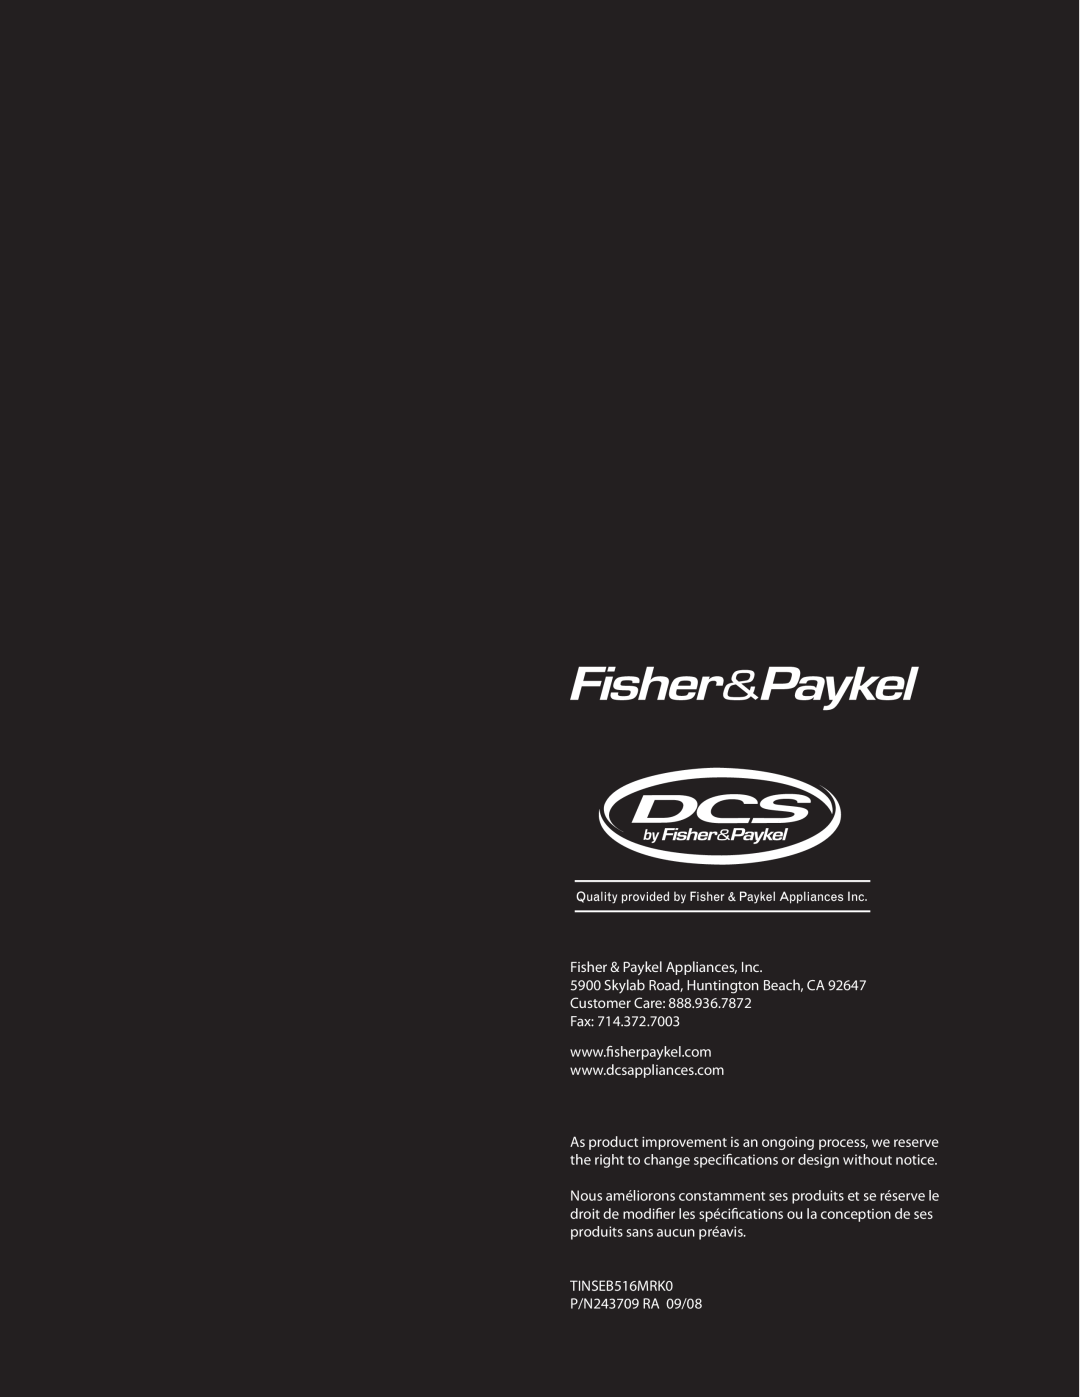 DCS CMOH30SS manual Fisher & Paykel Appliances, Inc, Skylab Road, Huntington Beach, CA Customer Care Fax 